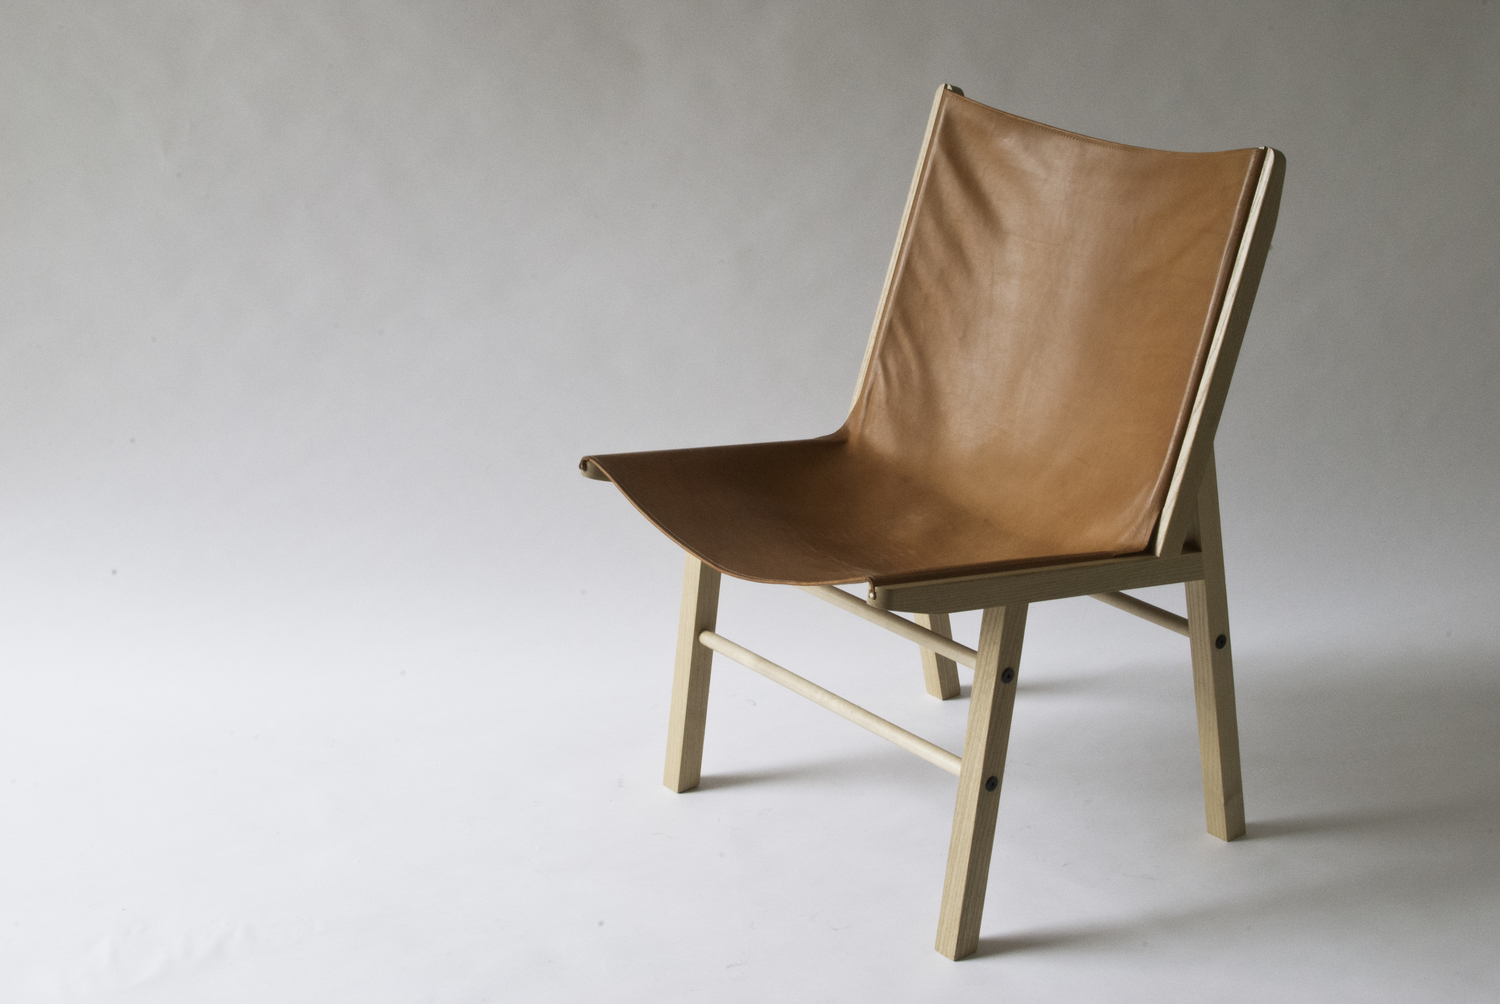 No. 3 Chair by Studio Gorm